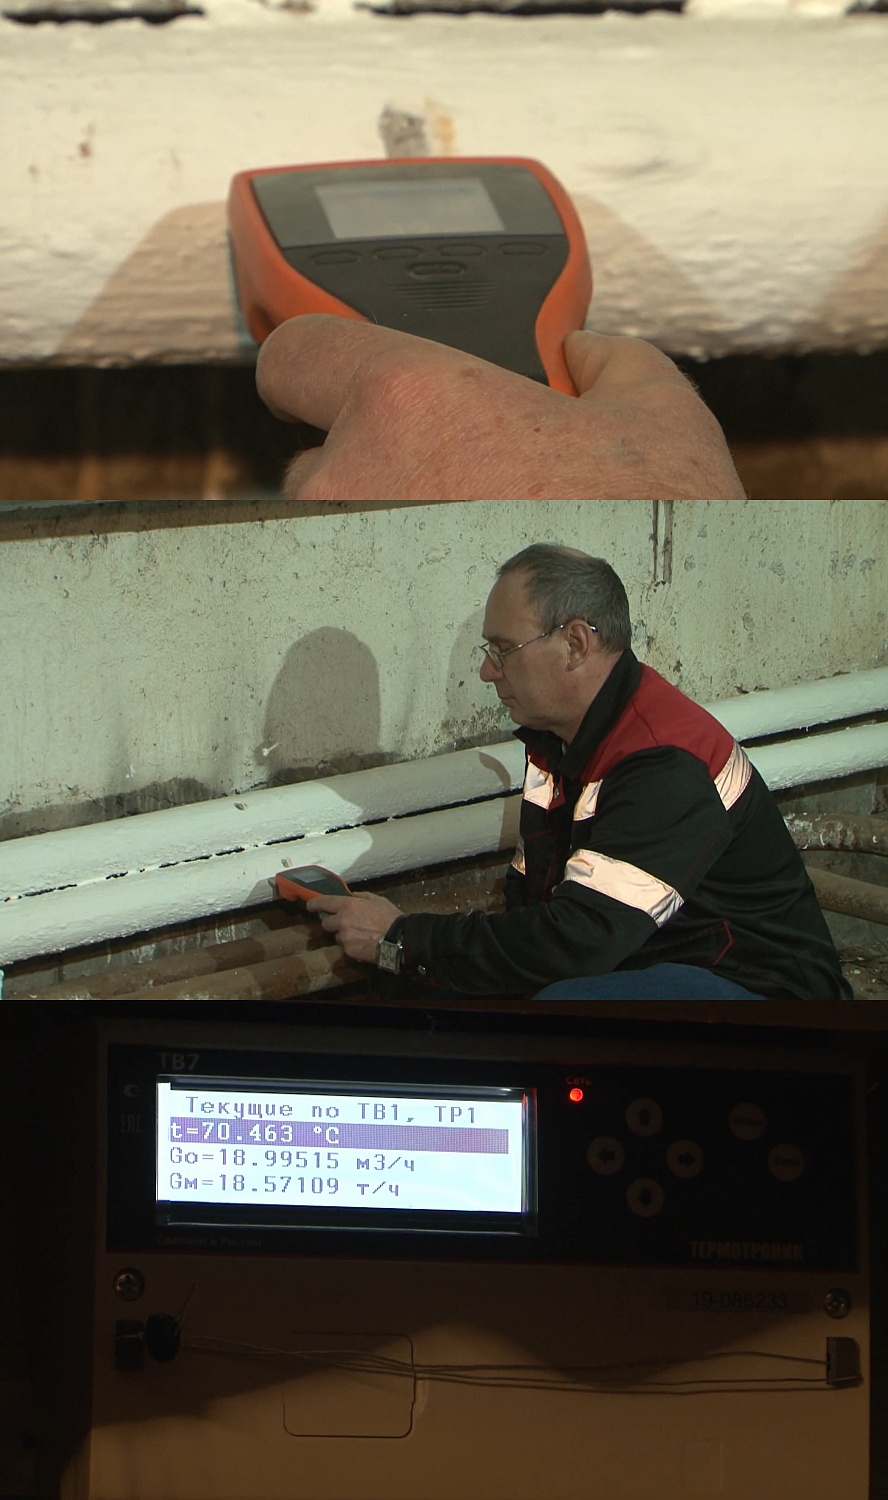 Important! TV report "Thermal insulation Bronya Antikor in ZhKK in Belogorsk, Amur Region" (photo preview + video footage)